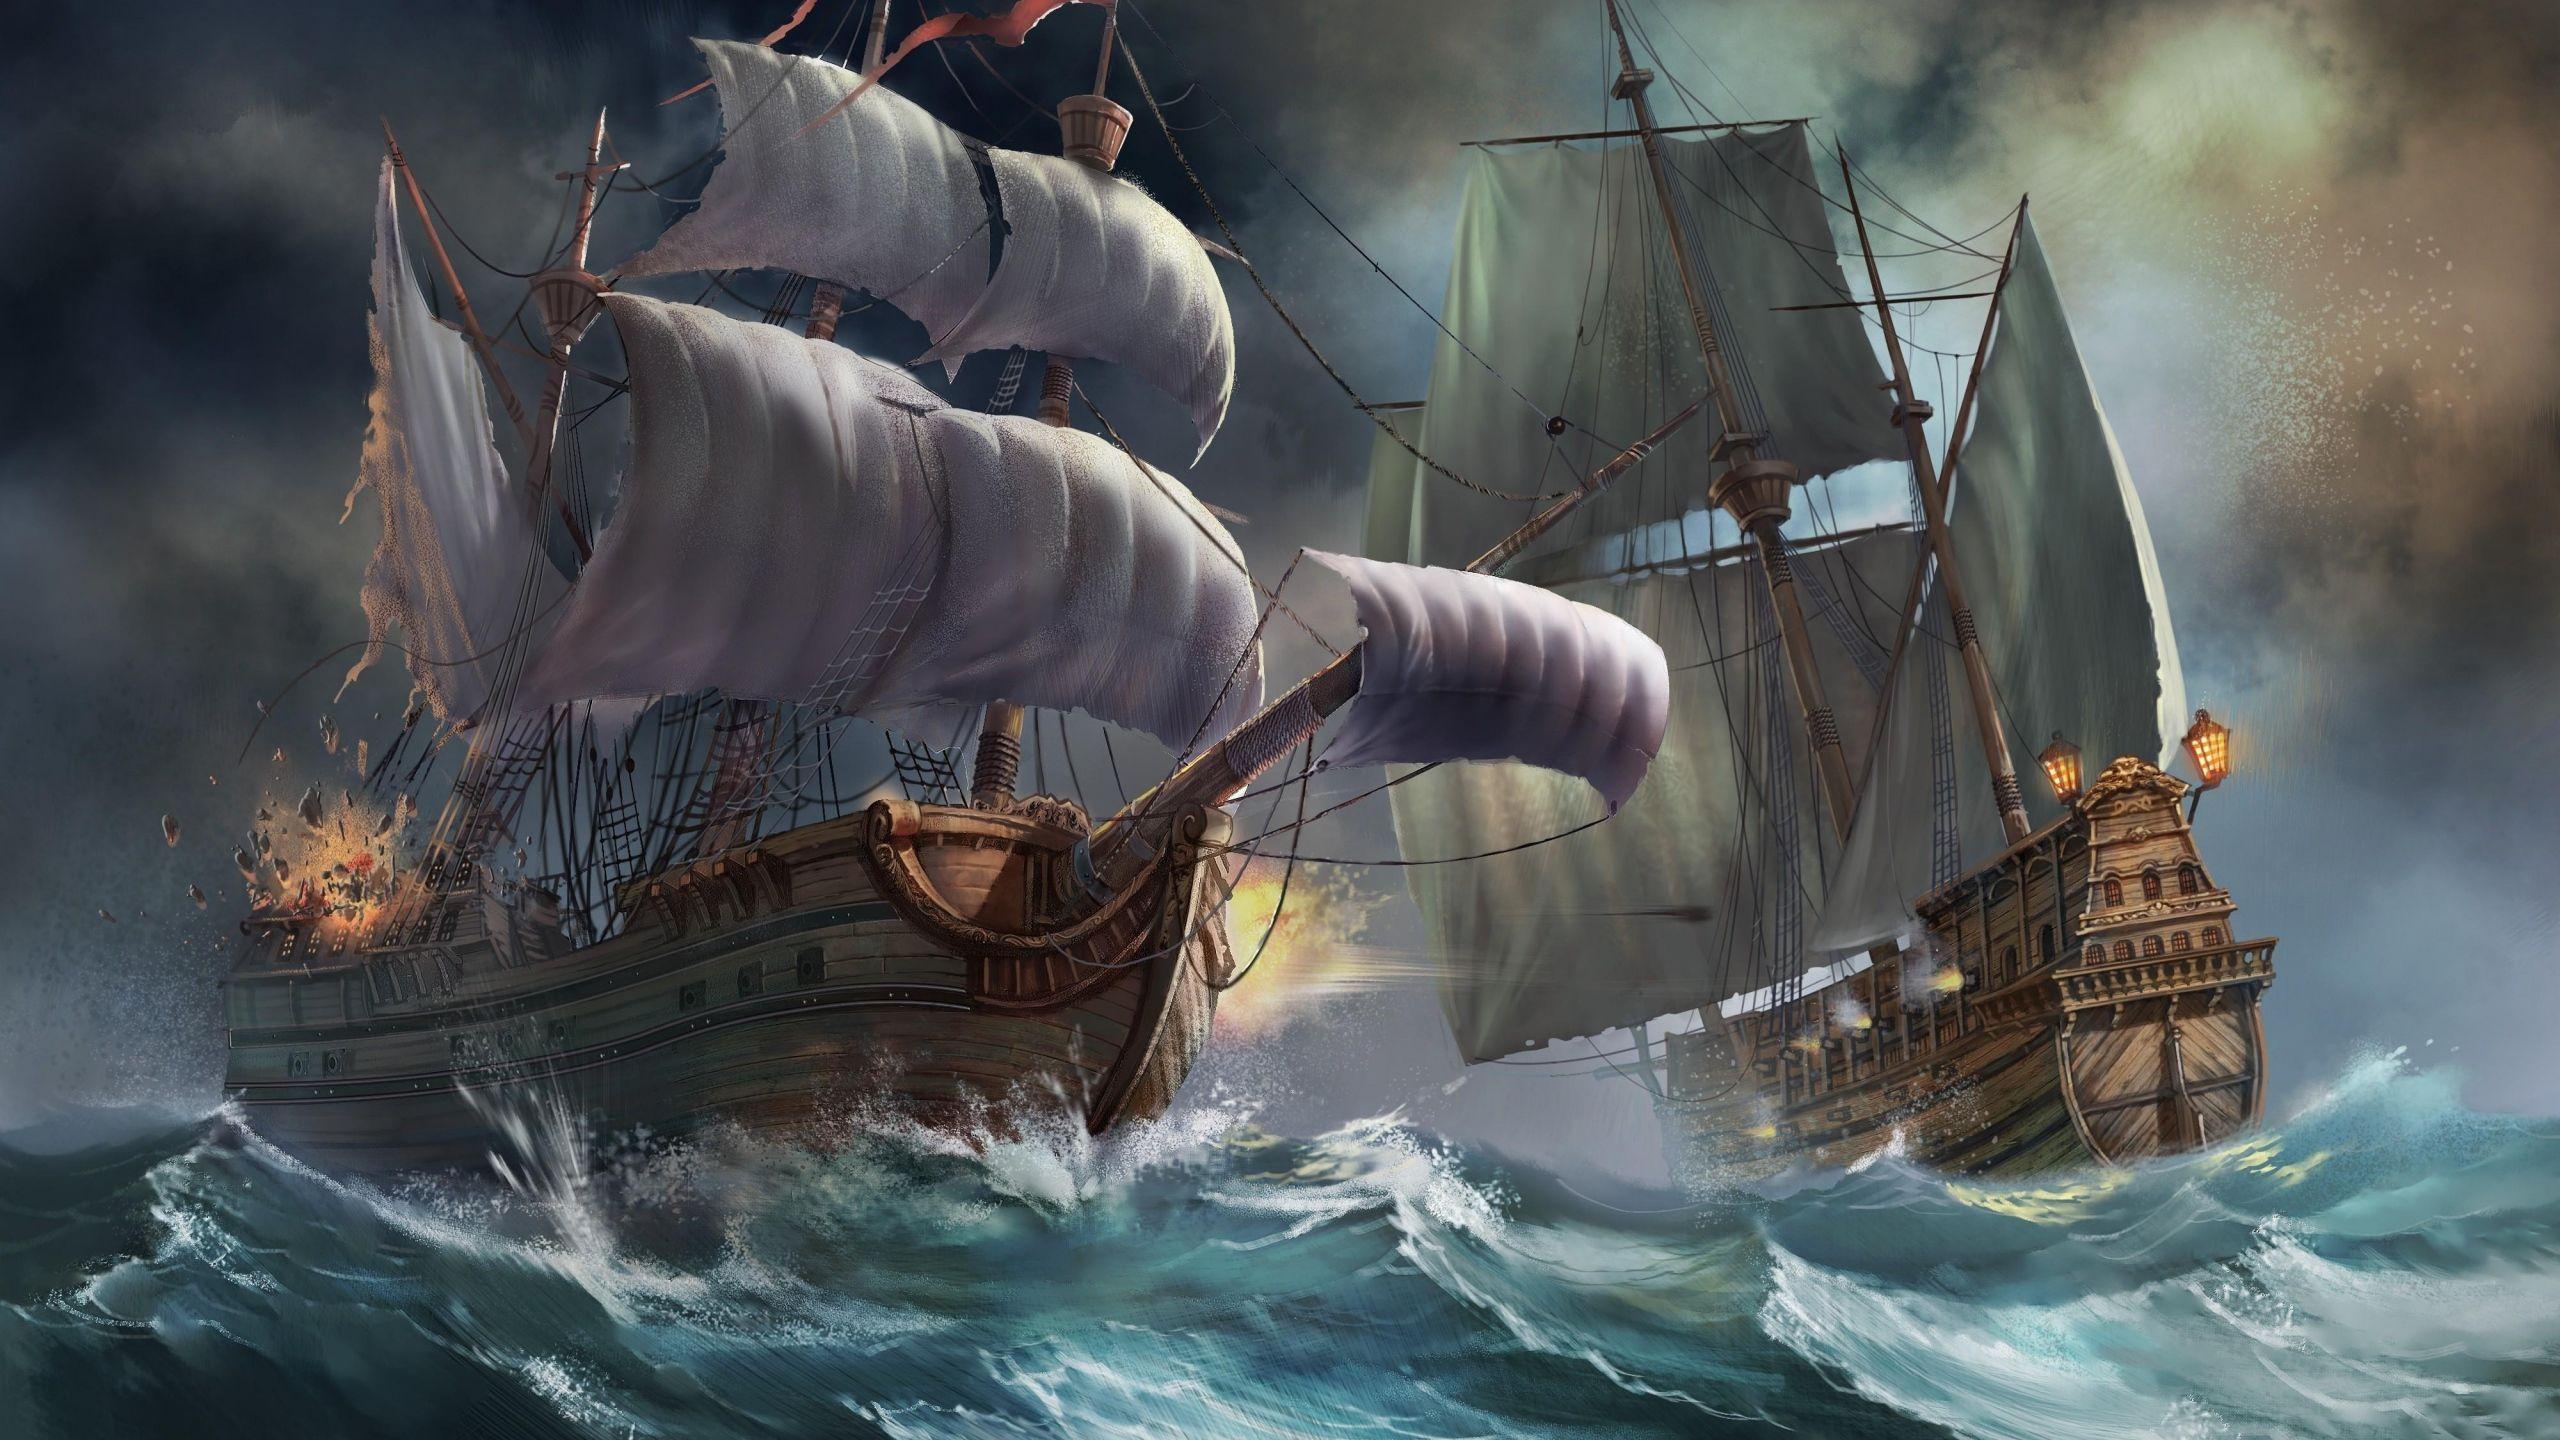 Download Wallpaper 2560x1440 Ships, Sea, Storm, Explosion Mac iMac 27 HD Background. Sailing ships, Sailing, Boat